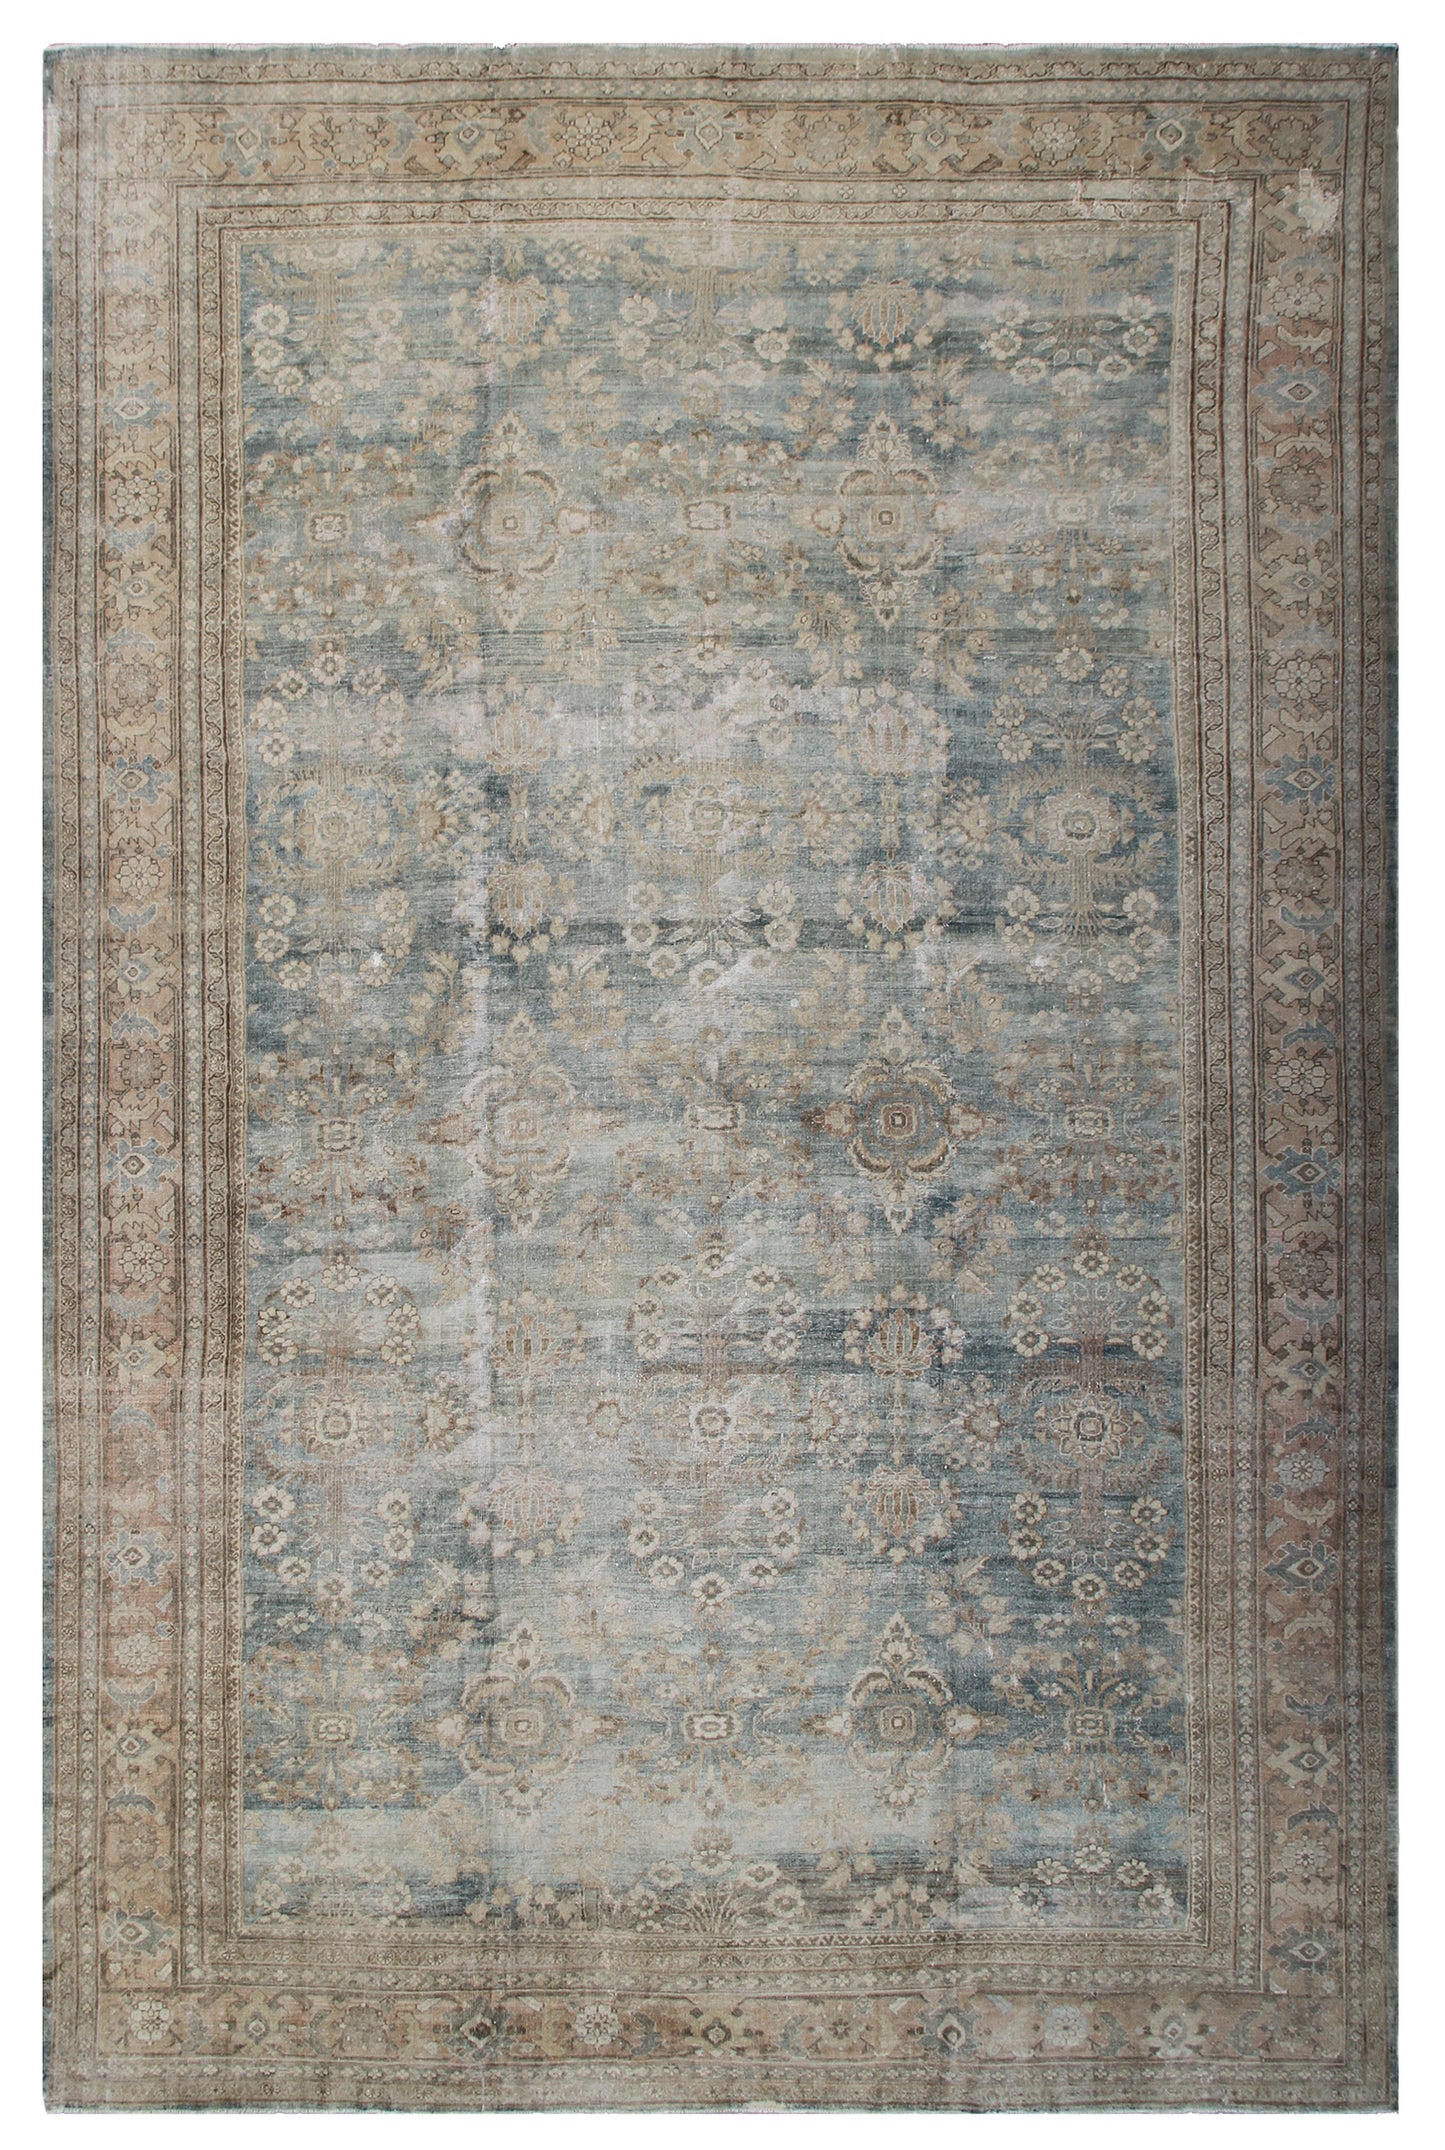 12'x18' Blue Distressed Antique Persian Mahal Rug